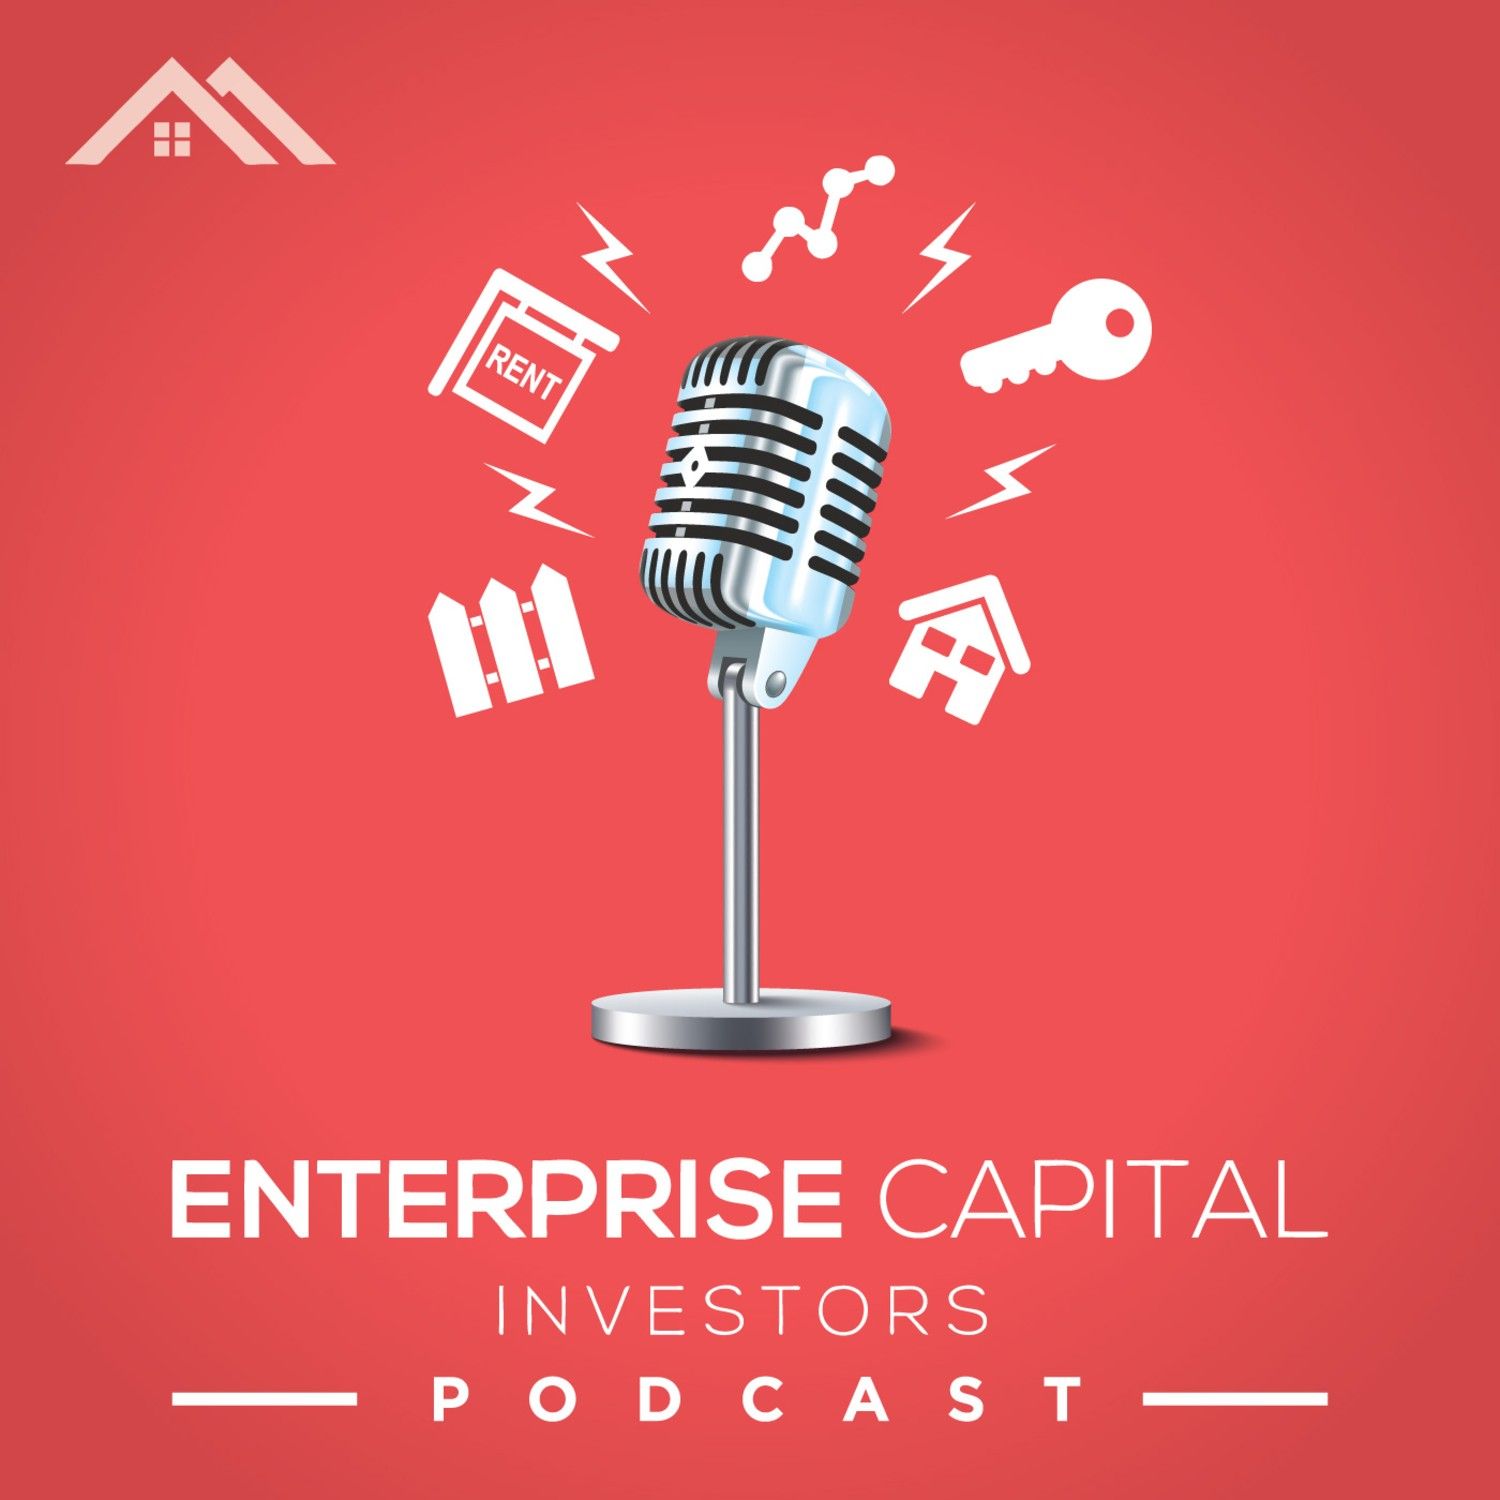 Enterprise Capital Investors Podcast